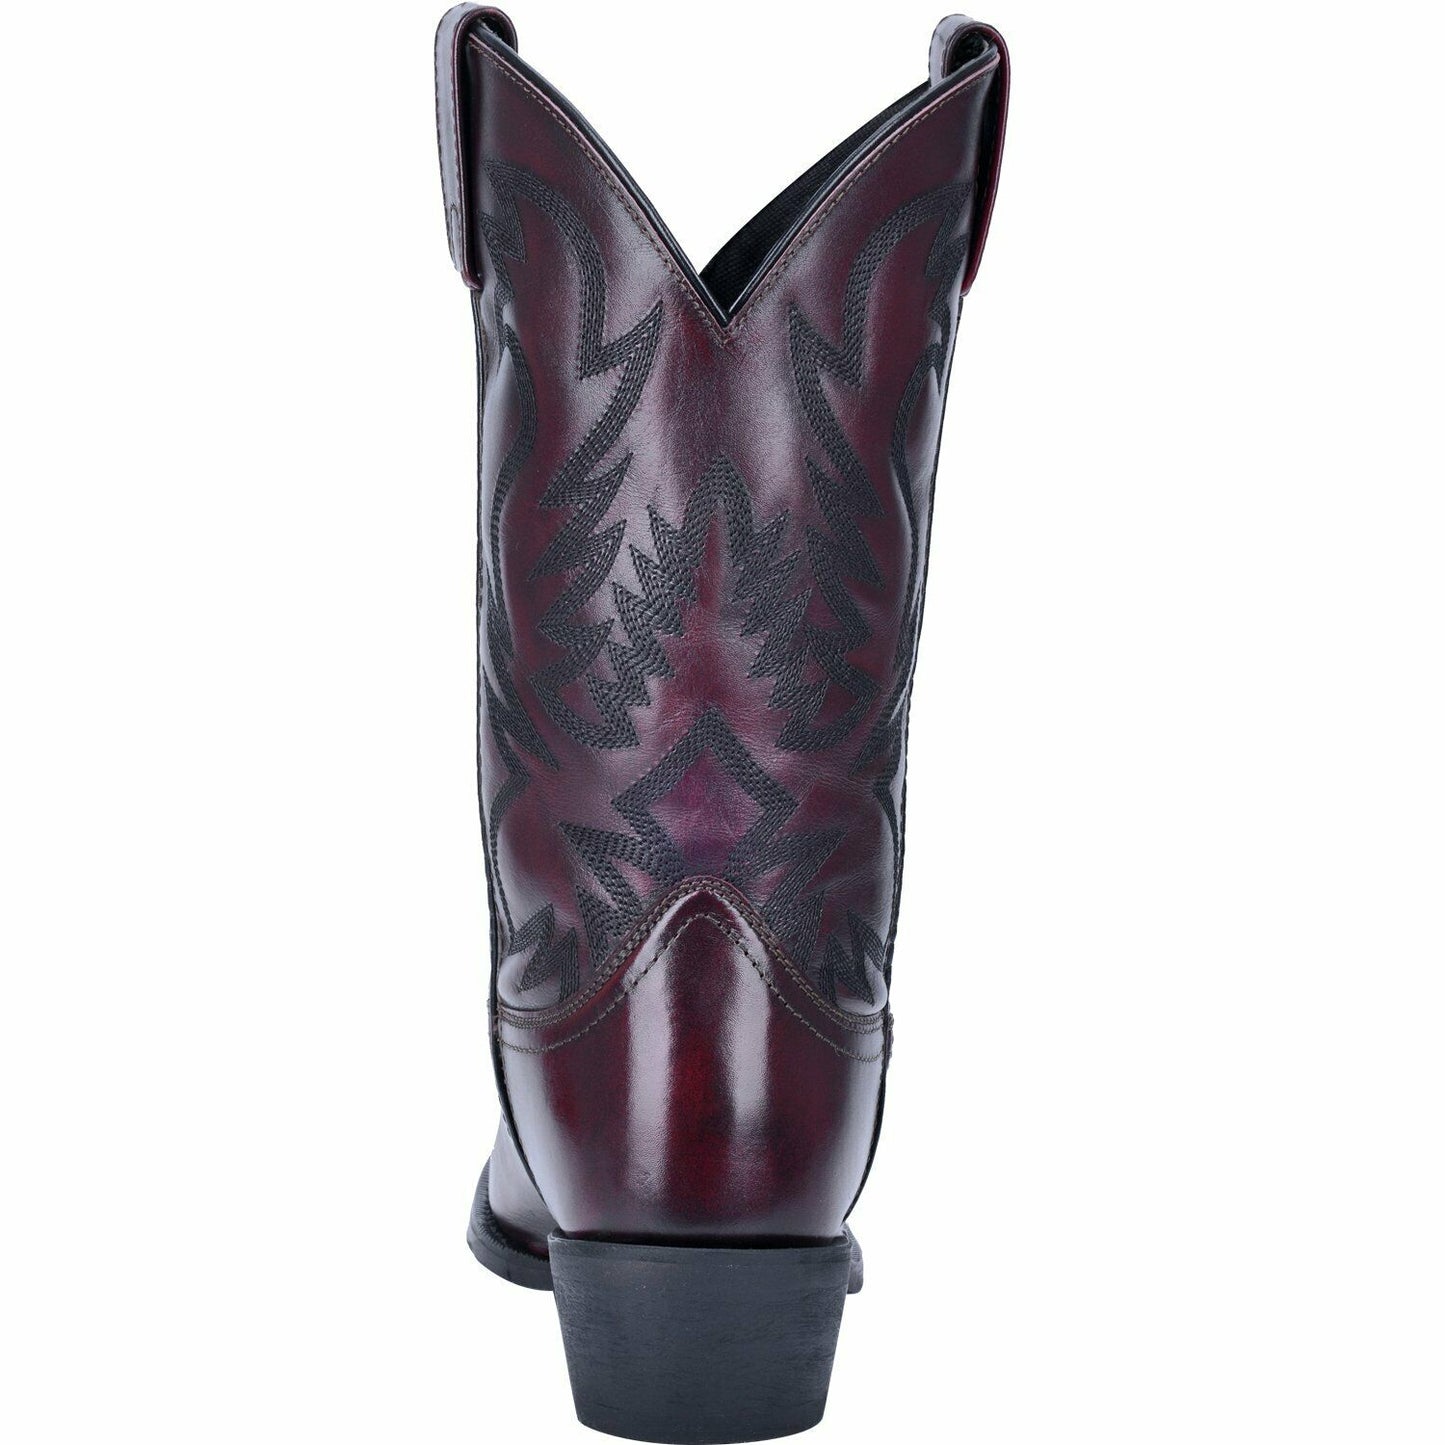 Laredo Men's Lawton Black Cherry Square Toe Leather Cowboy Boots 68448